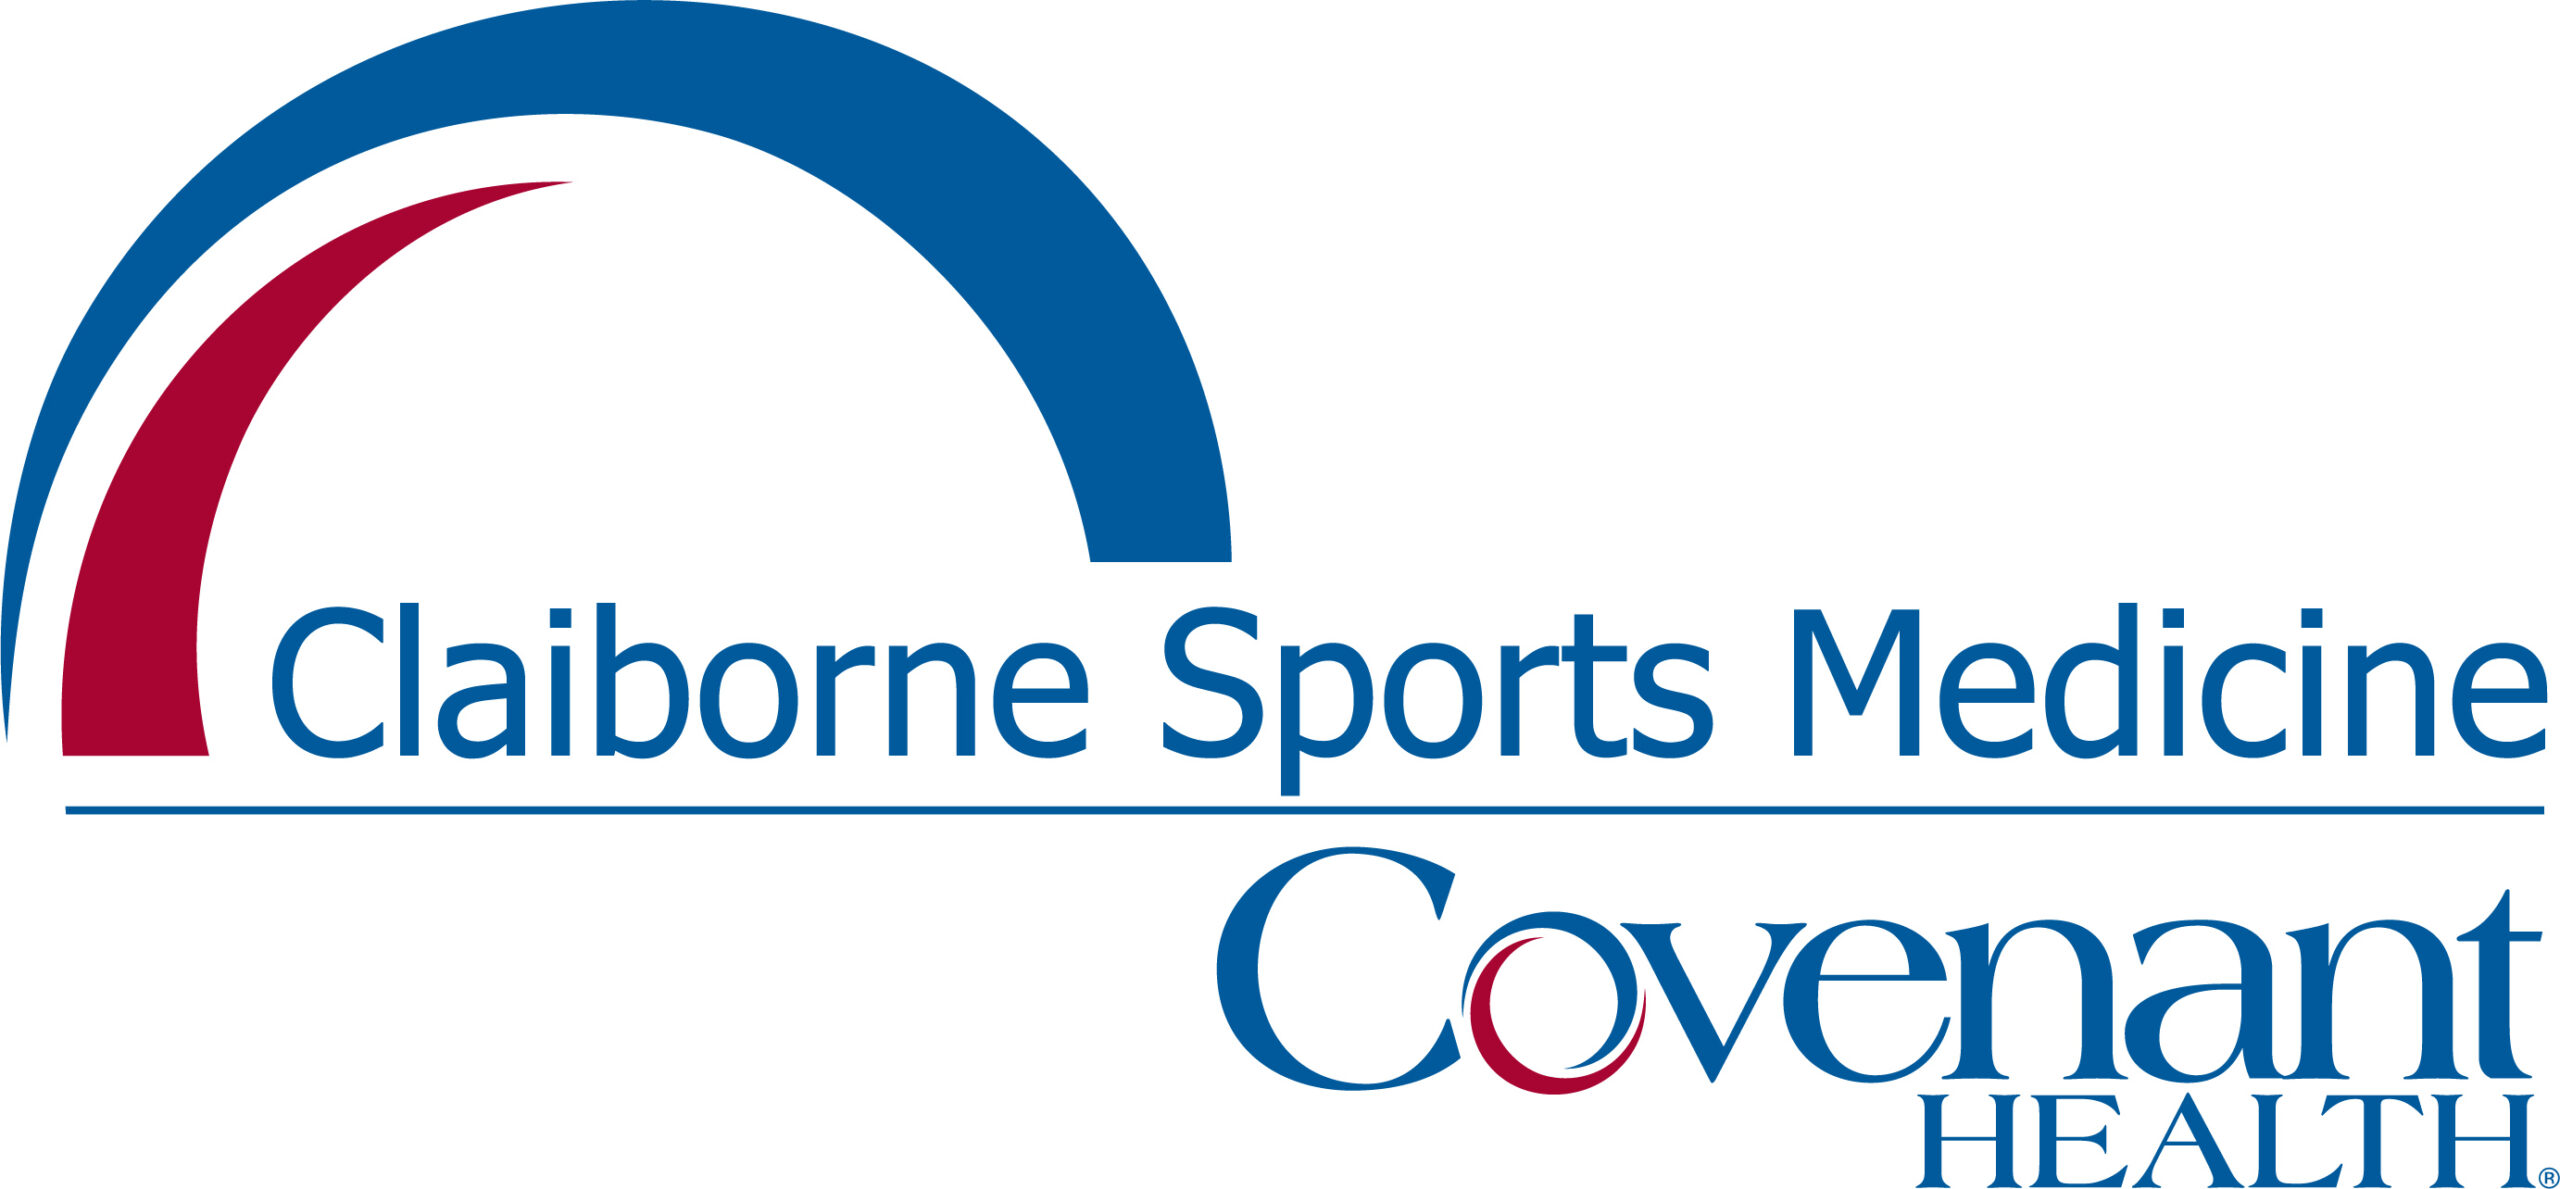 Claiborne-Sports-Medicine-logo-scaled.jpg